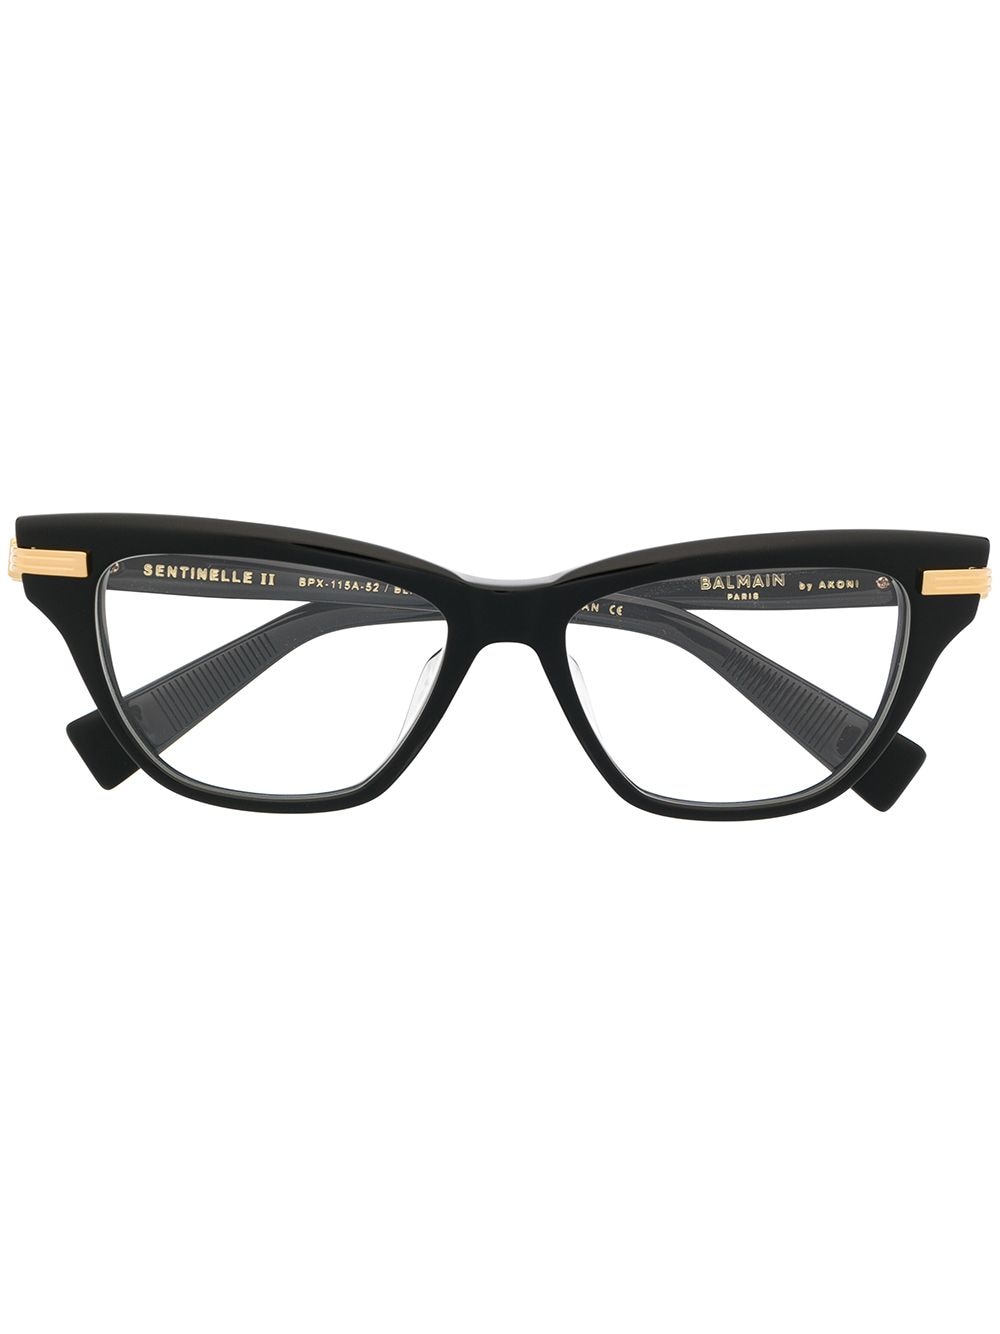 Balmain Eyewear Sentinelle II glasses - Black von Balmain Eyewear